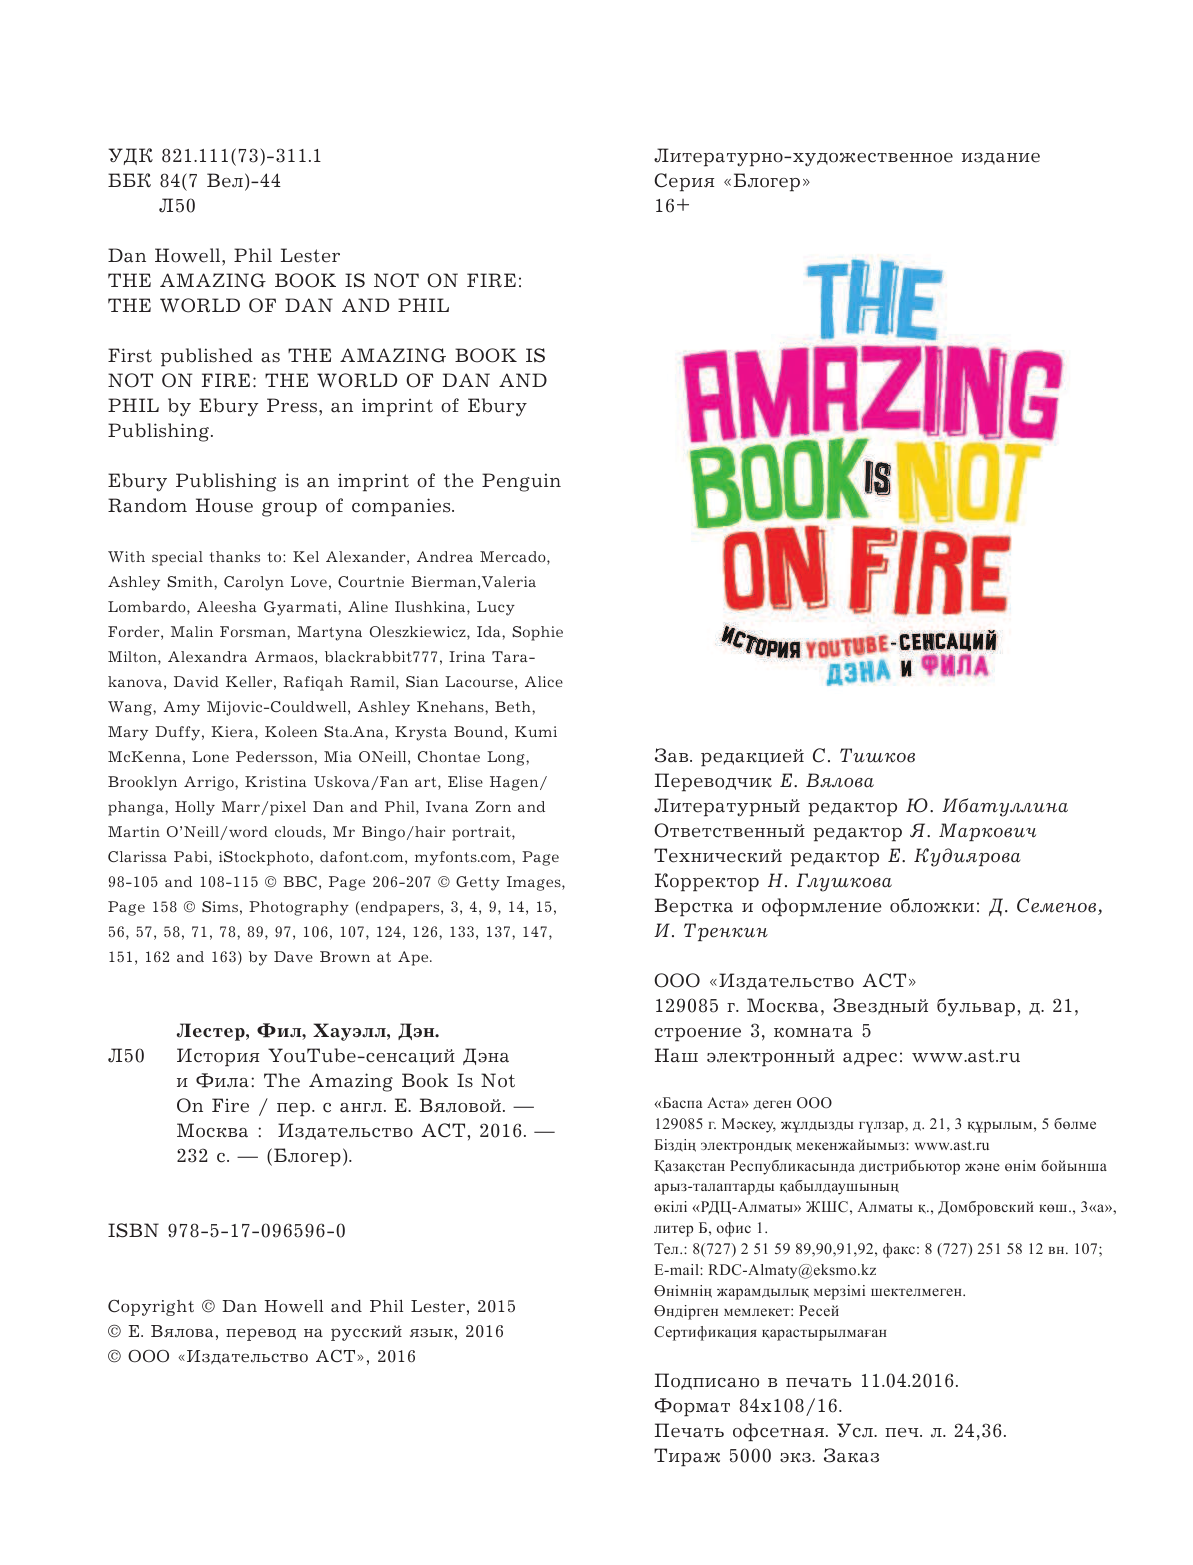 Хауэлл Дэн, Лестер Фил История YouTube-сенсаций Дэна и Фила: The Amazing Book Is Not On Fire - страница 3